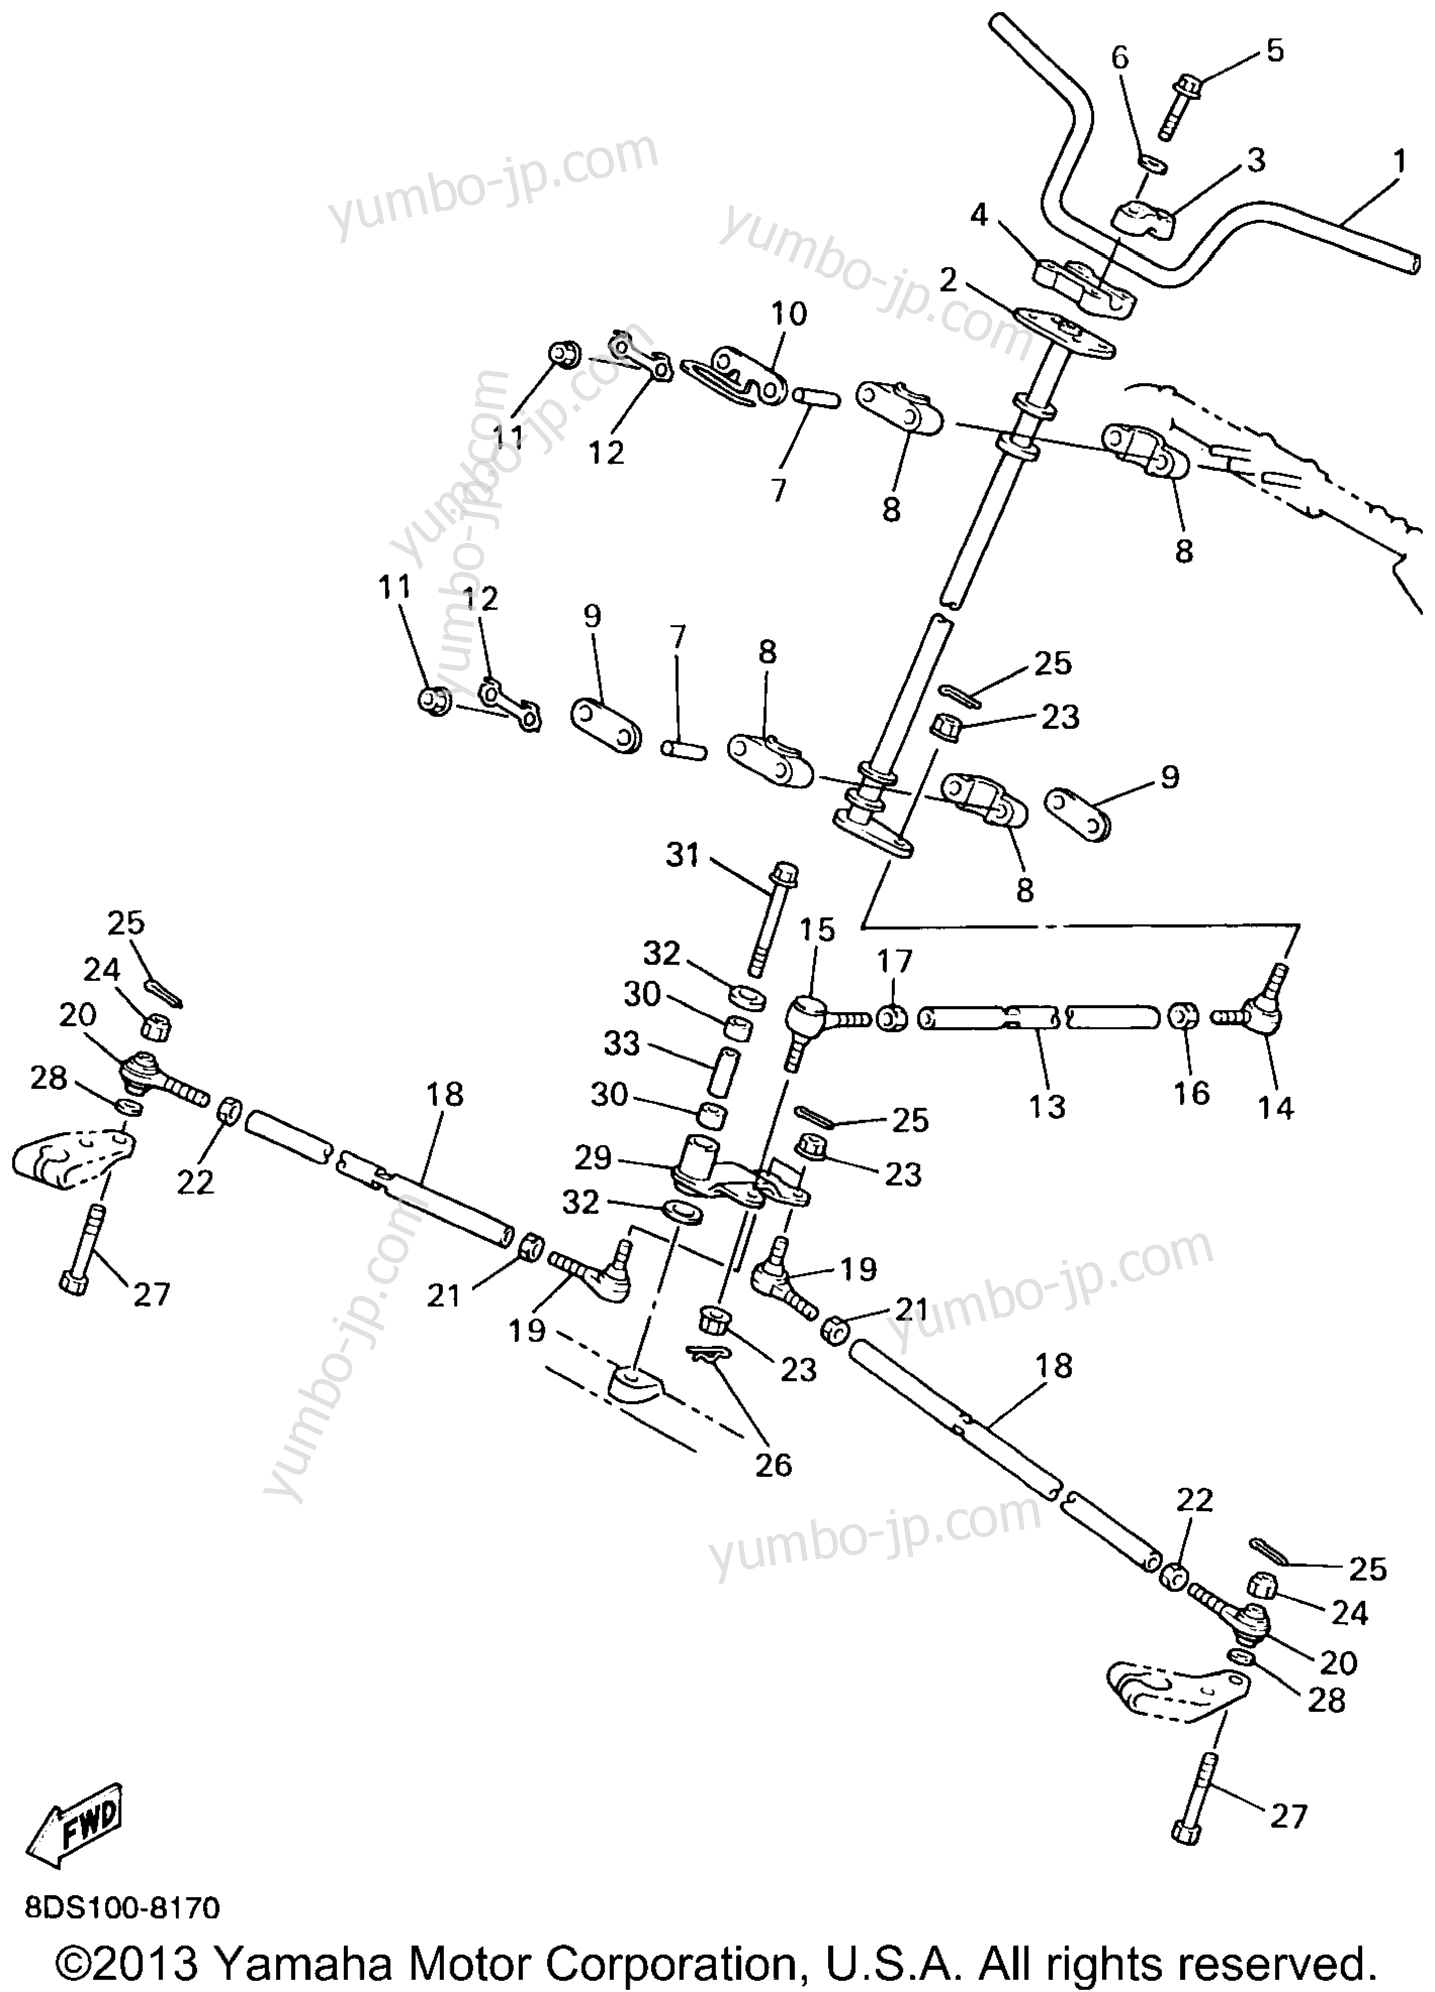 Steering for snowmobiles YAMAHA VMAX 700 XTCP (PLASTIC SKI, 1.5"TRACK) (VX700XTCPB) 1998 year